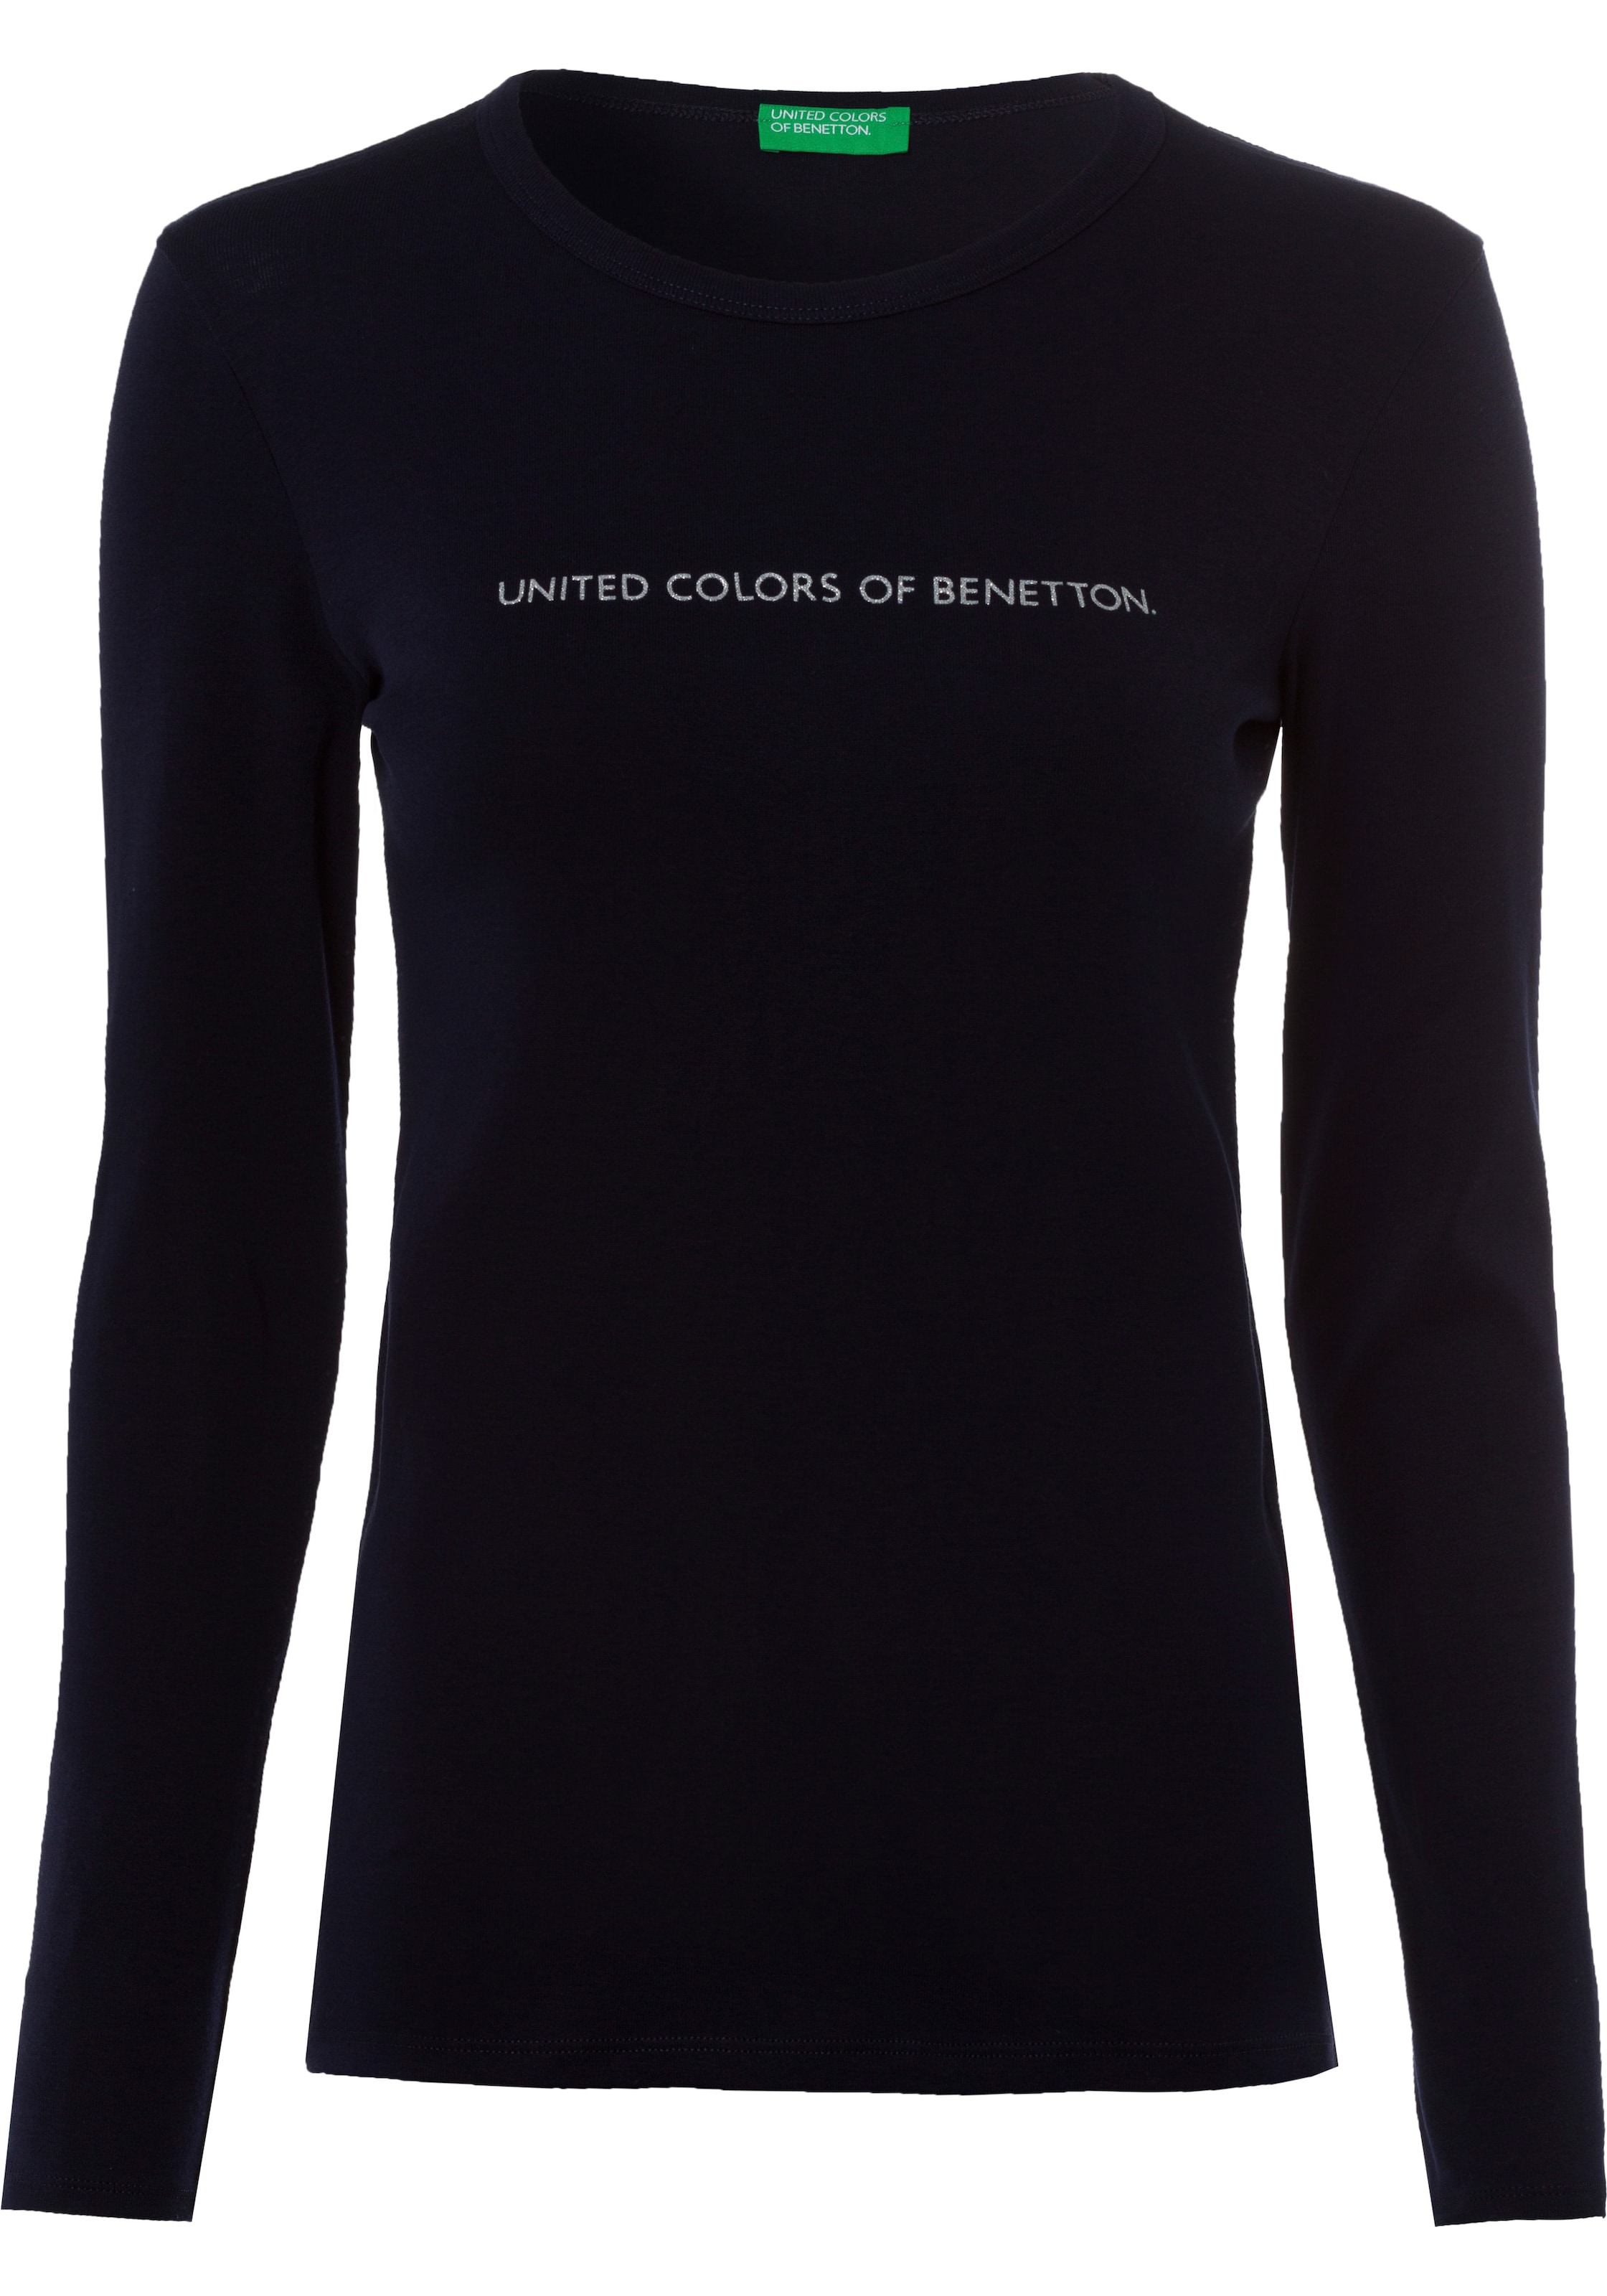 United Colors Langarmshirt, Benetton Optik einsetzbarer vielseitig in kaufen of